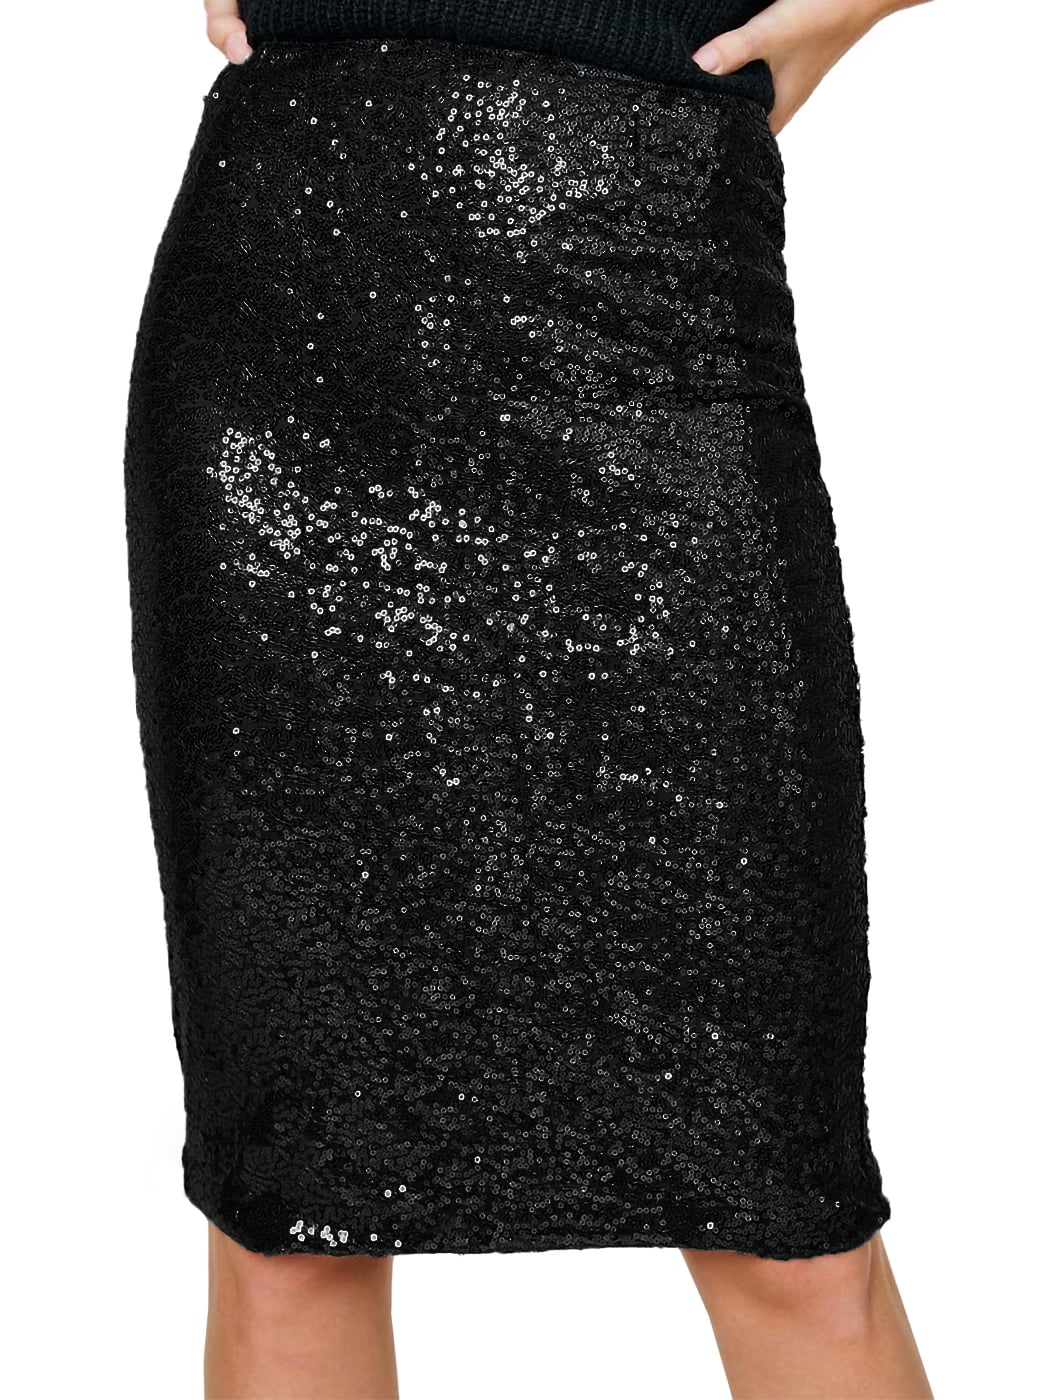 Women's High Waist Sparkly Black Sequins Midi Skirt Pencil Cocktail Party  Skirt, Black, Small - Walmart.com